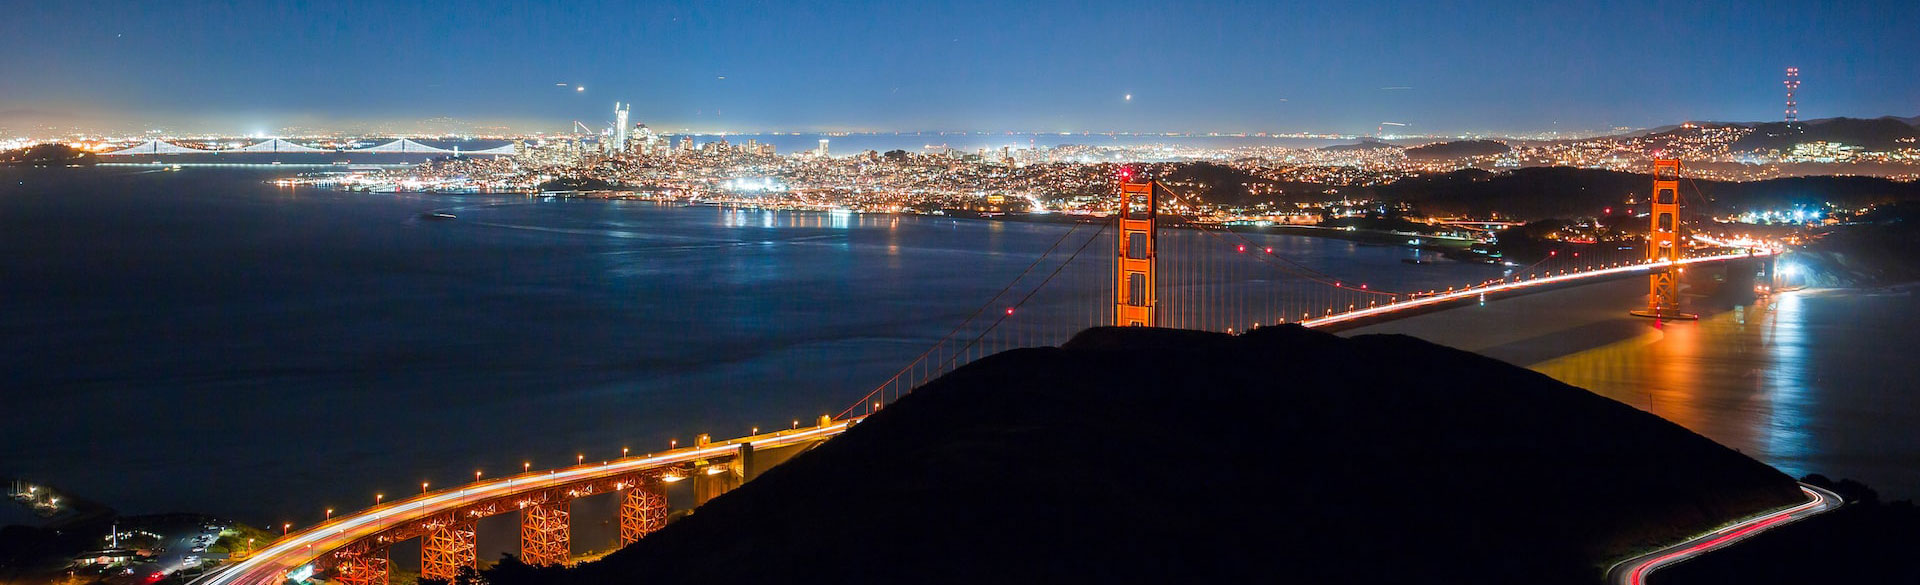 Baia di San Francisco e Golden Gate Bridge di notte